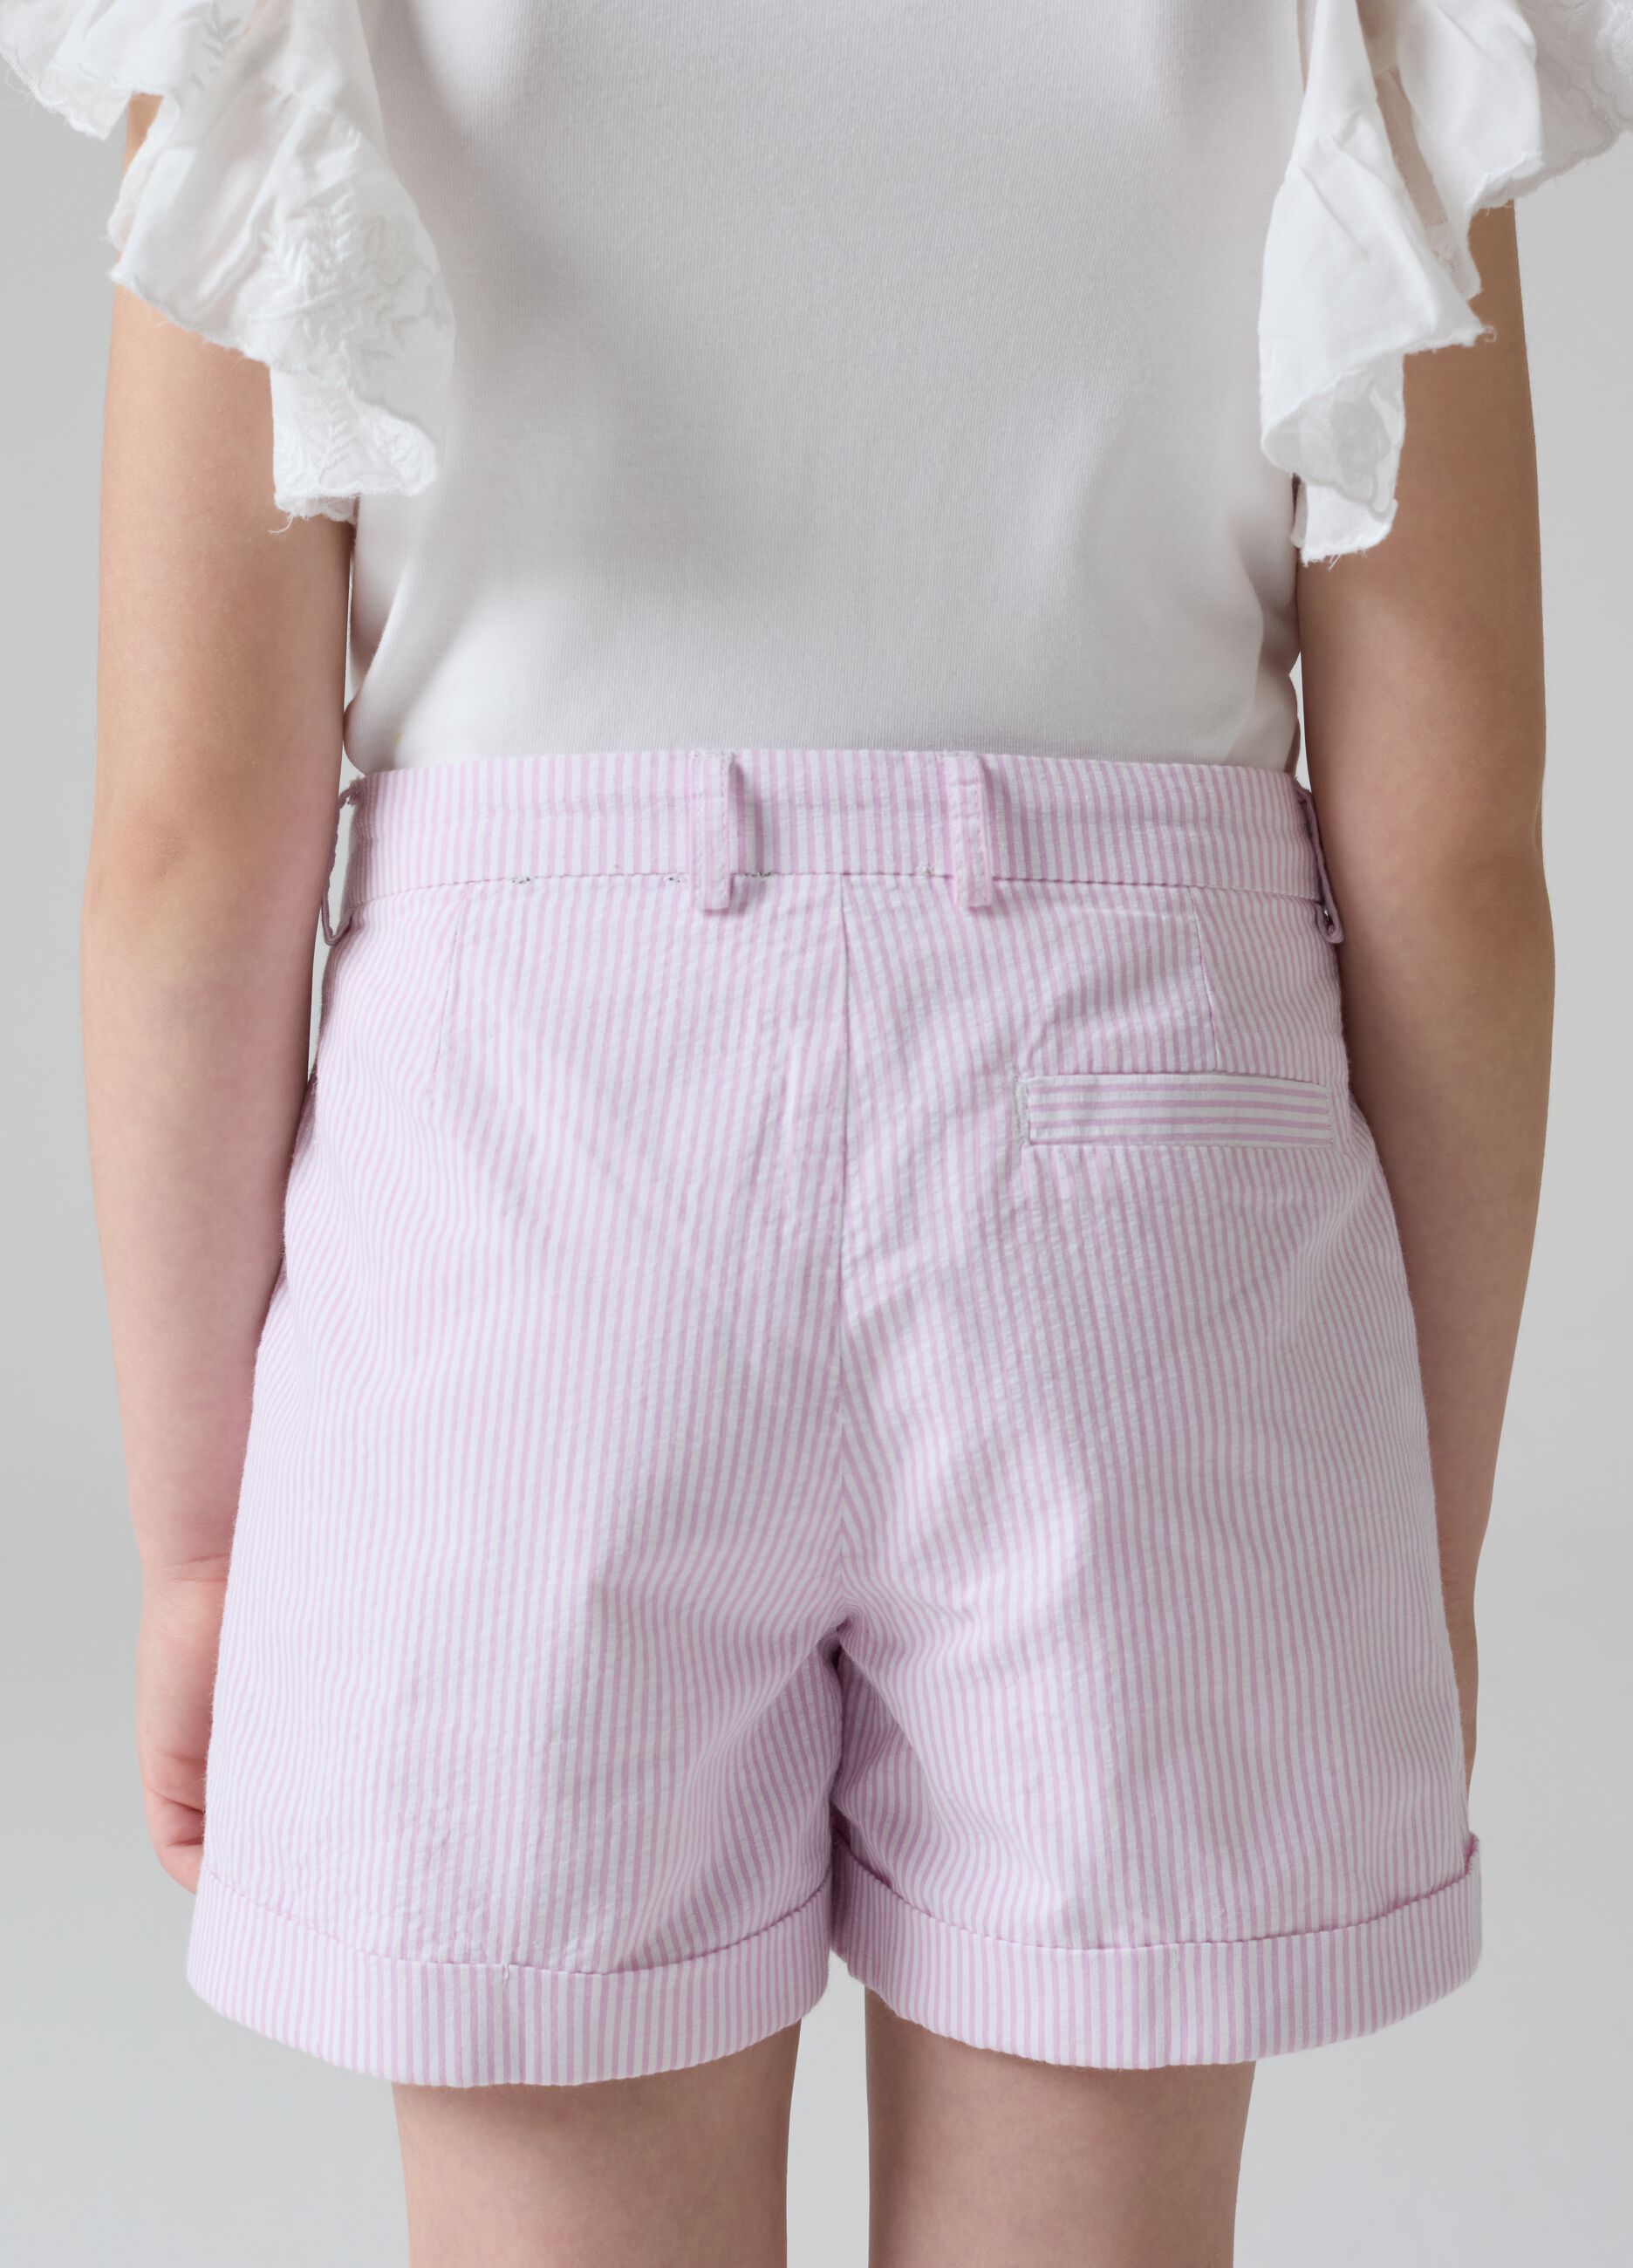 Seersucker shorts with striped pattern